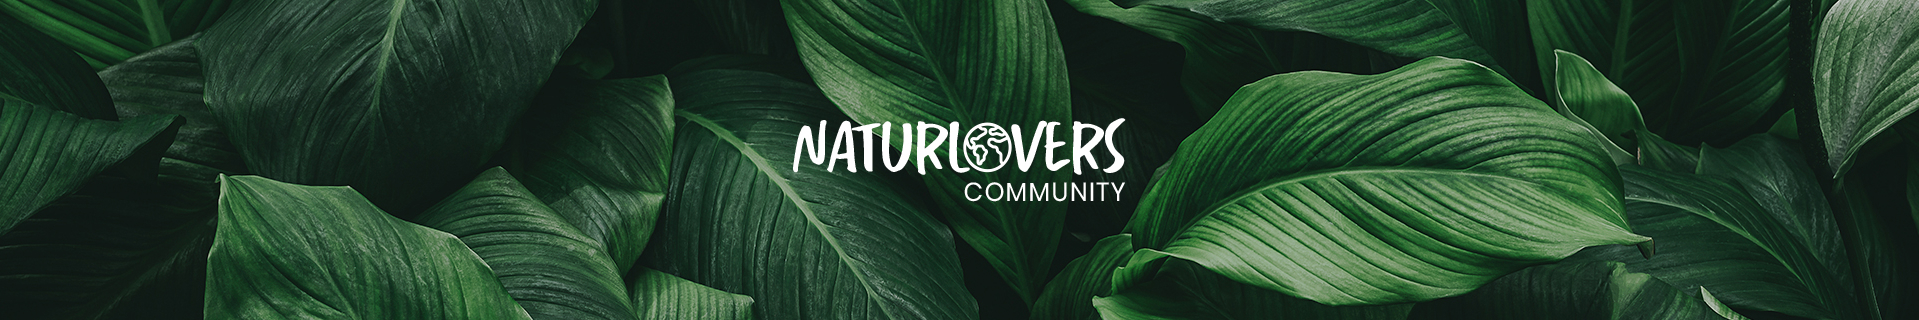 Naturlovers Community